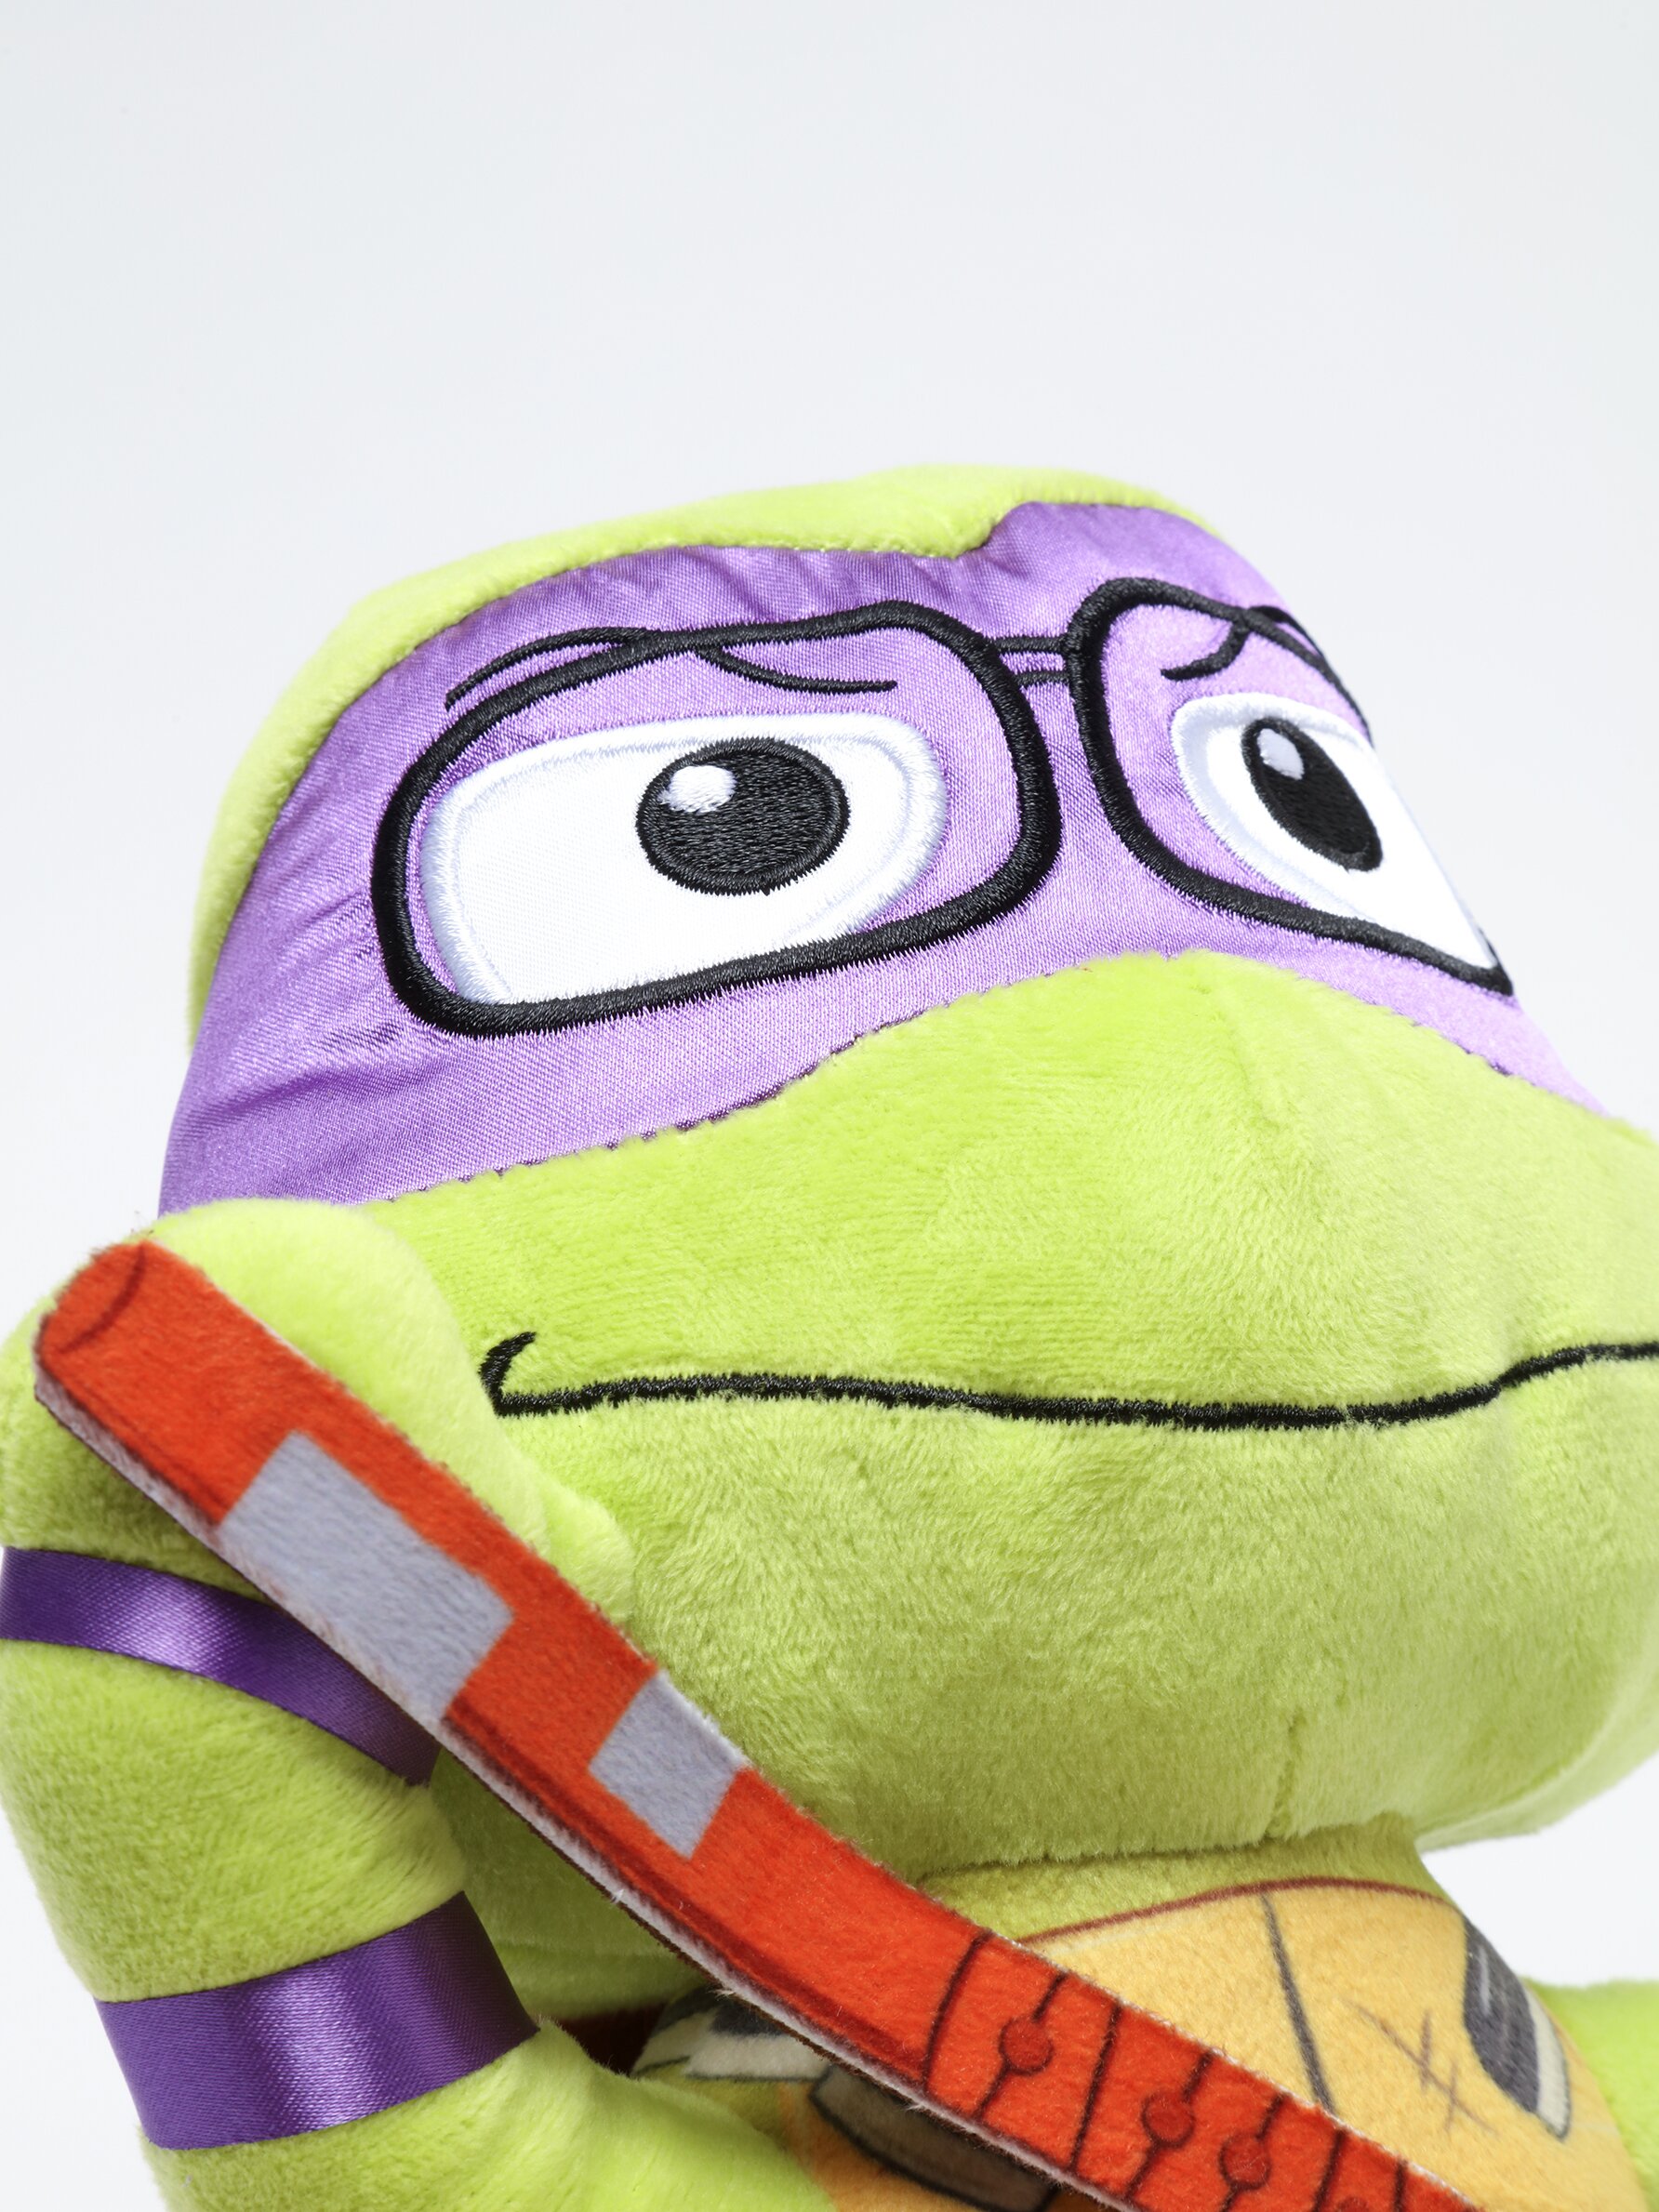 Teenage Mutant Ninja Turtles Donatello Teeny Tys Plush